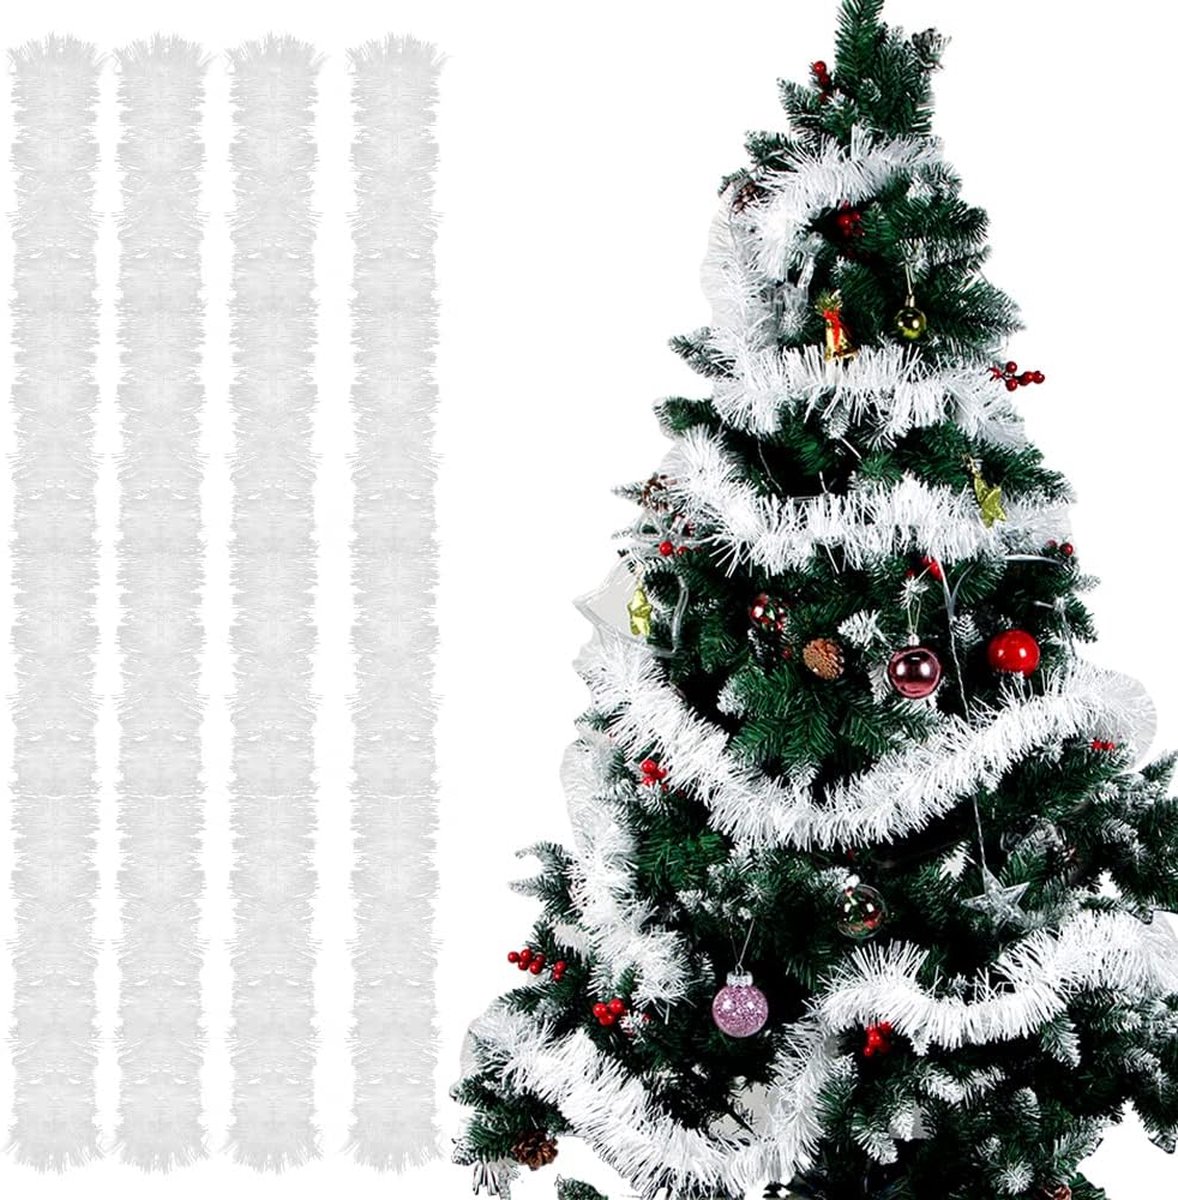 Kerstslingers, 4 stuks klatergoud kerstboom, 3 m klatergoud slinger, klatergoud slinger Kerstmis, kerstdecoratie klatergoud voor kerstboom kerstfeest, verjaardagsfeestdecoratie (wit)